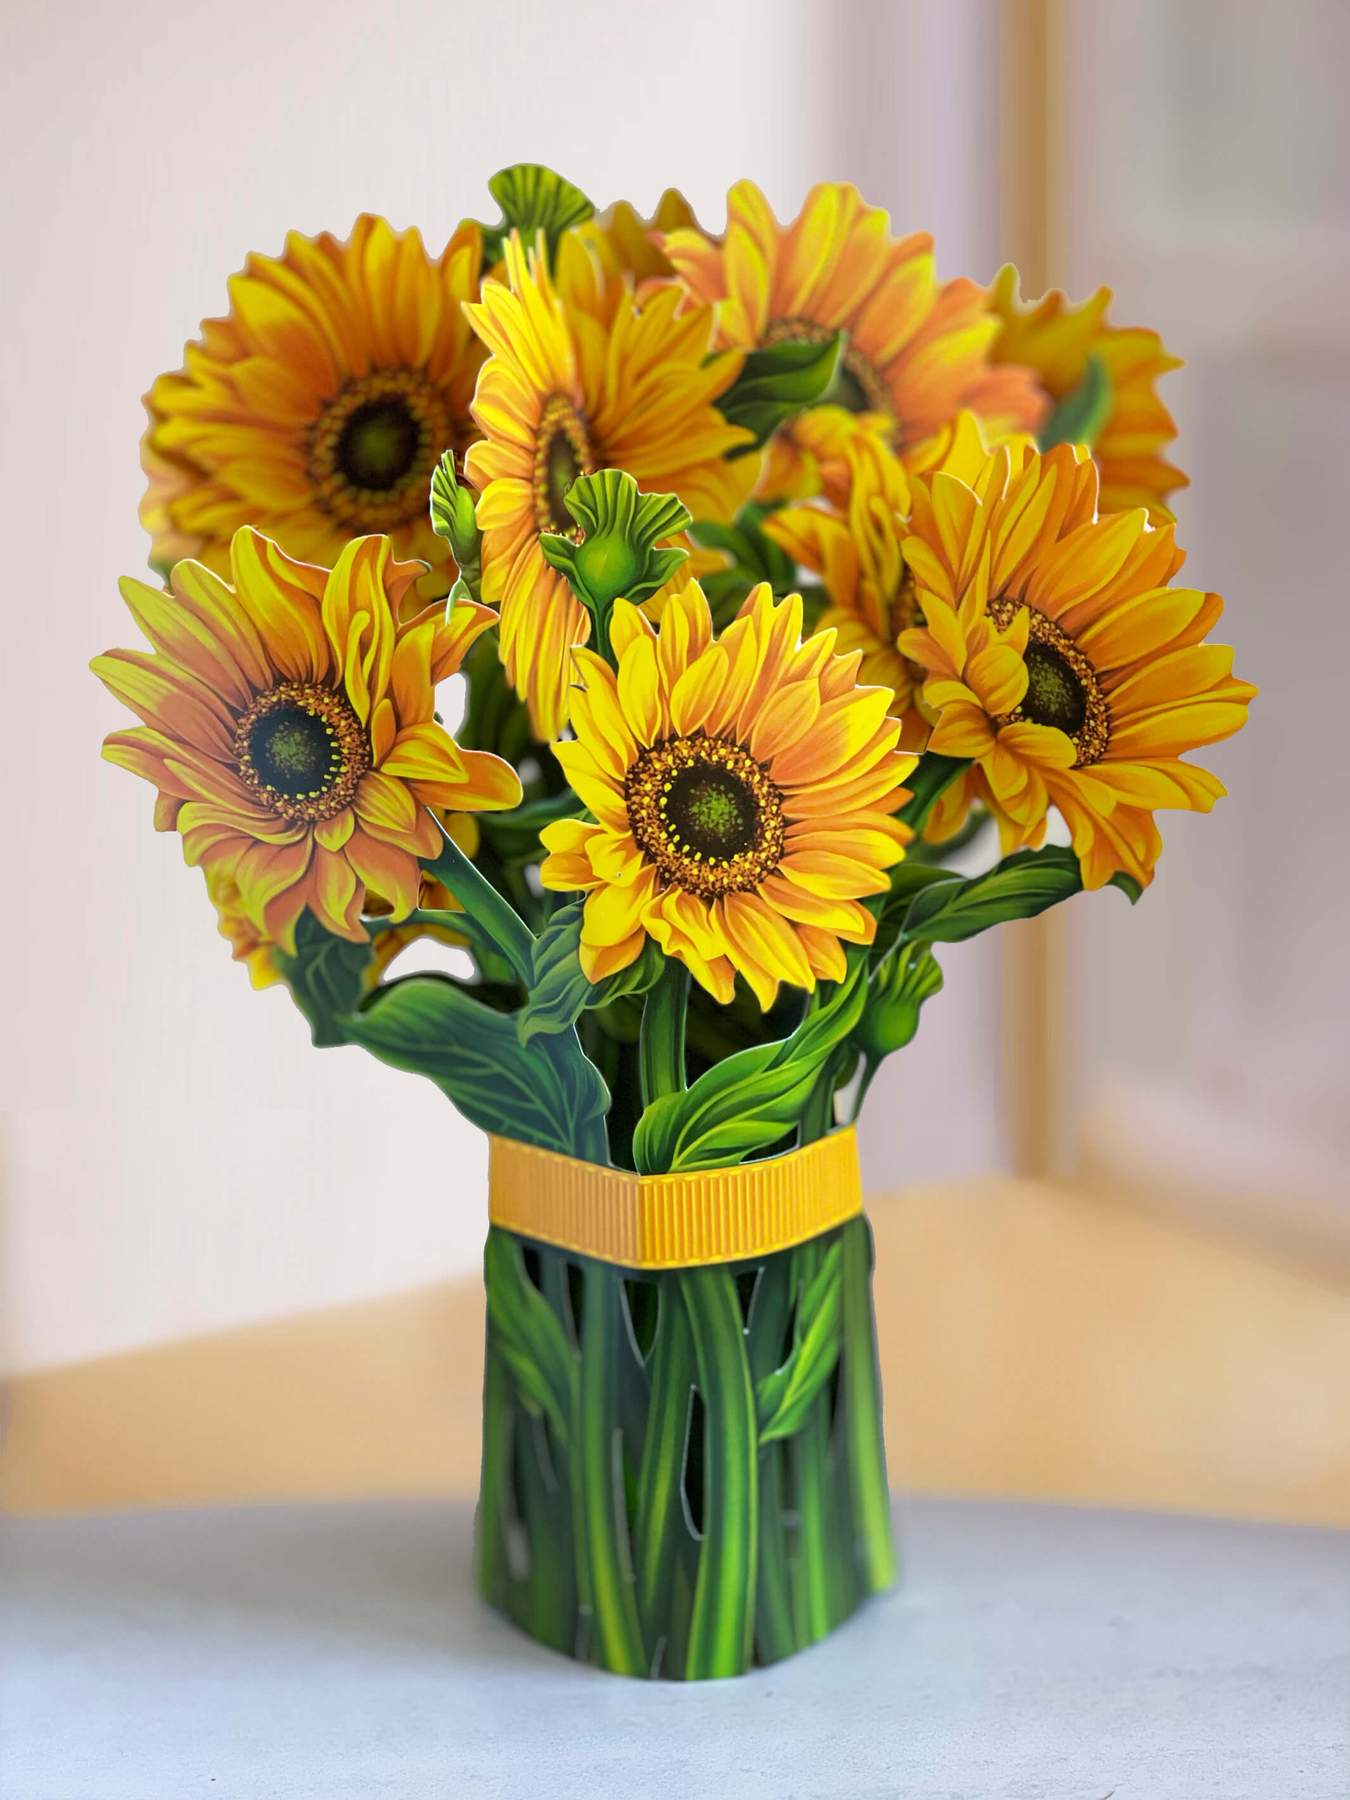 Pop Up Flower Bouquet Greeting Card - Sunflowers    